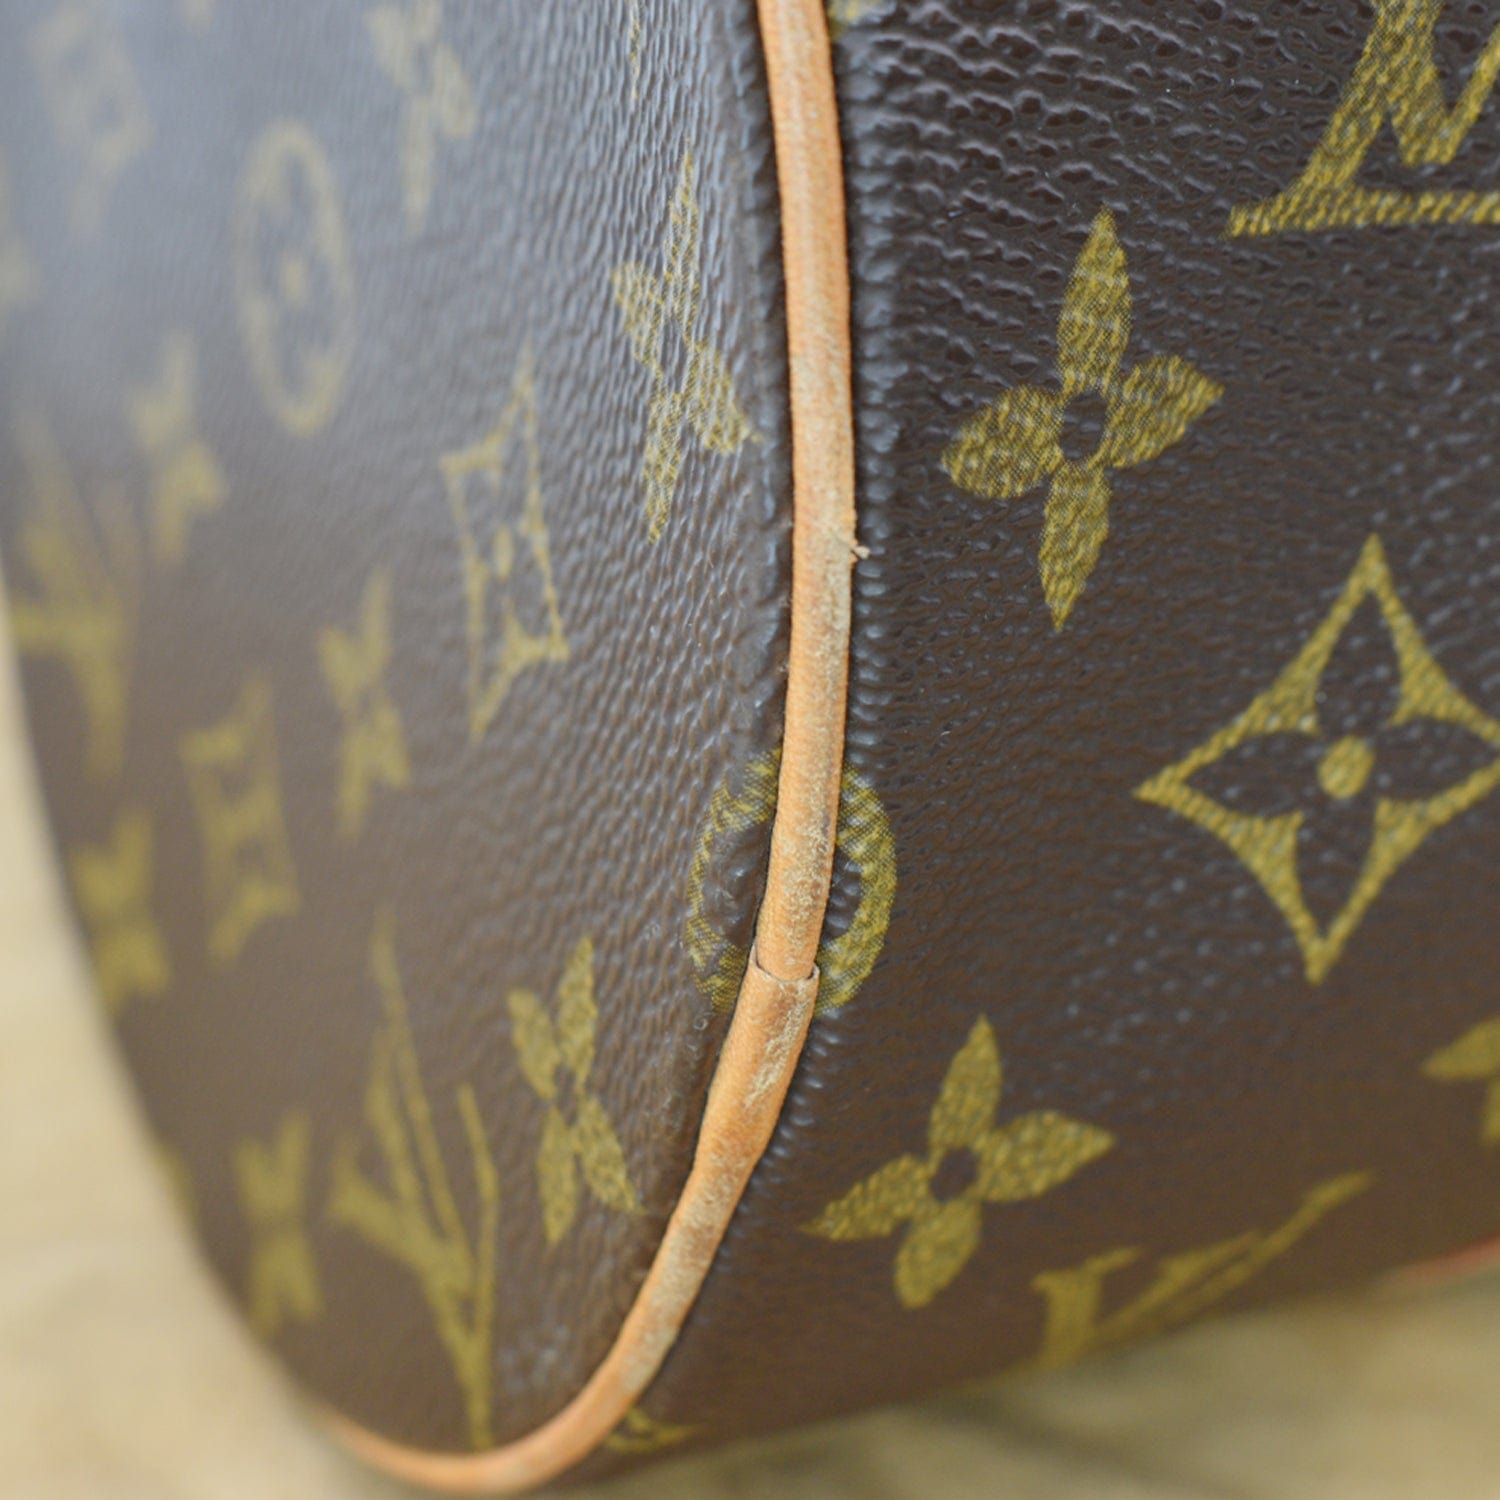 Does Louis Vuitton Offer Free Repair Bags Services? - Repair